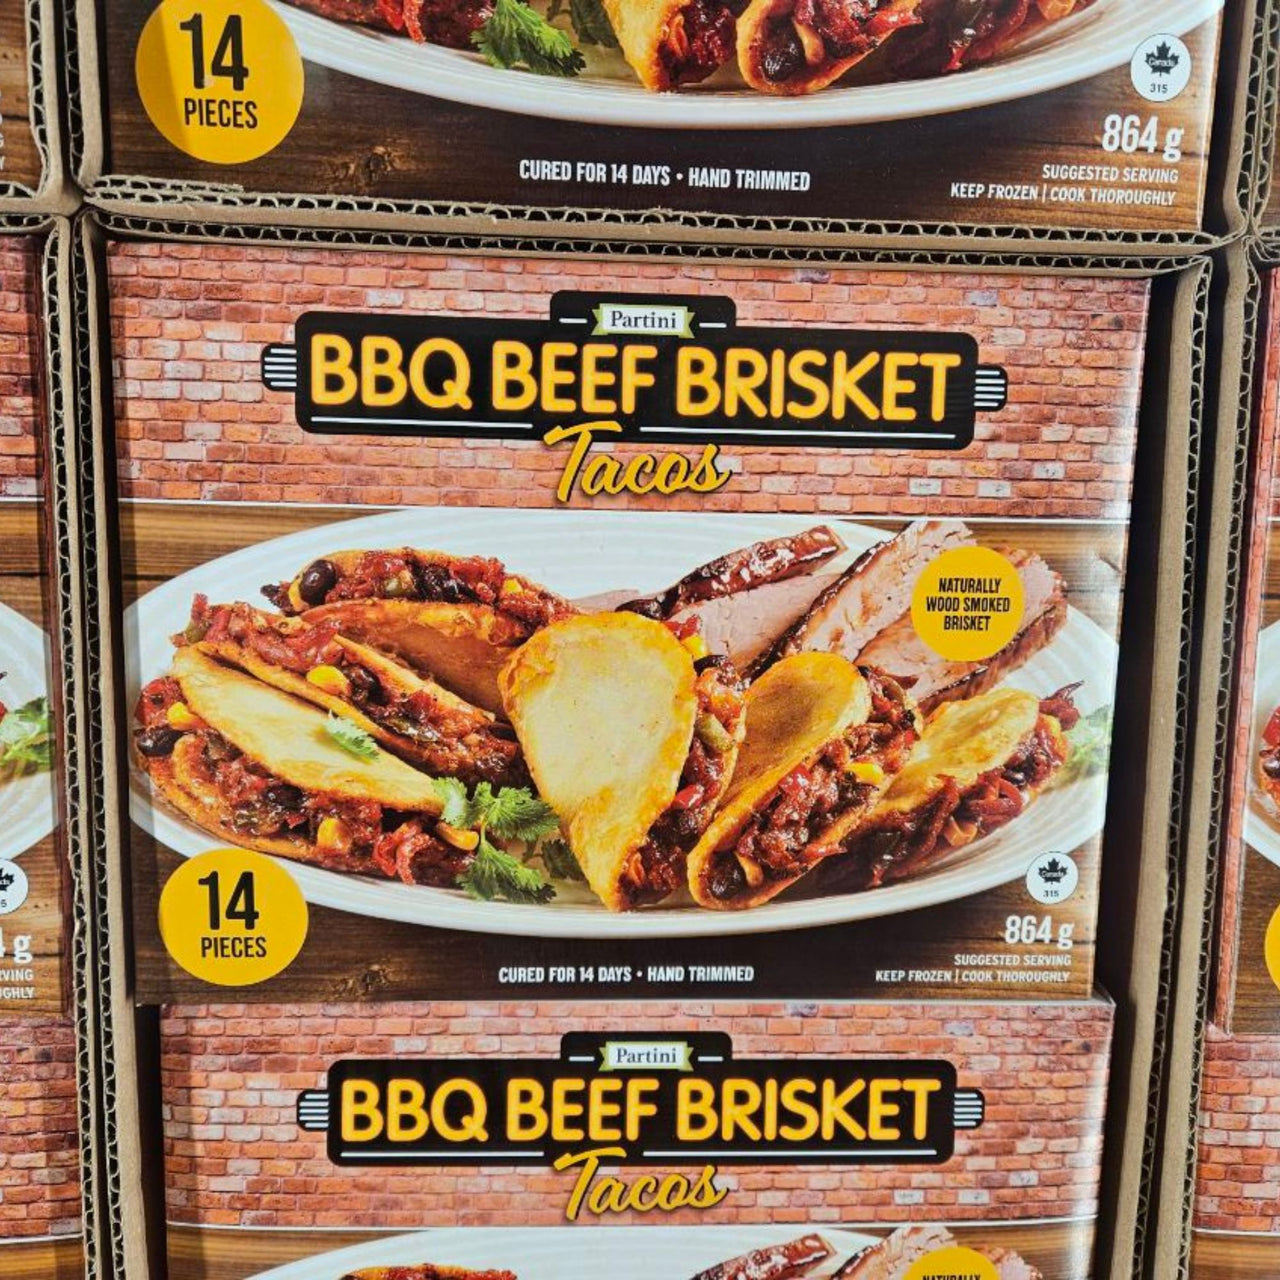 Image of Partini BBQ Beef Brisket Tacos 864g